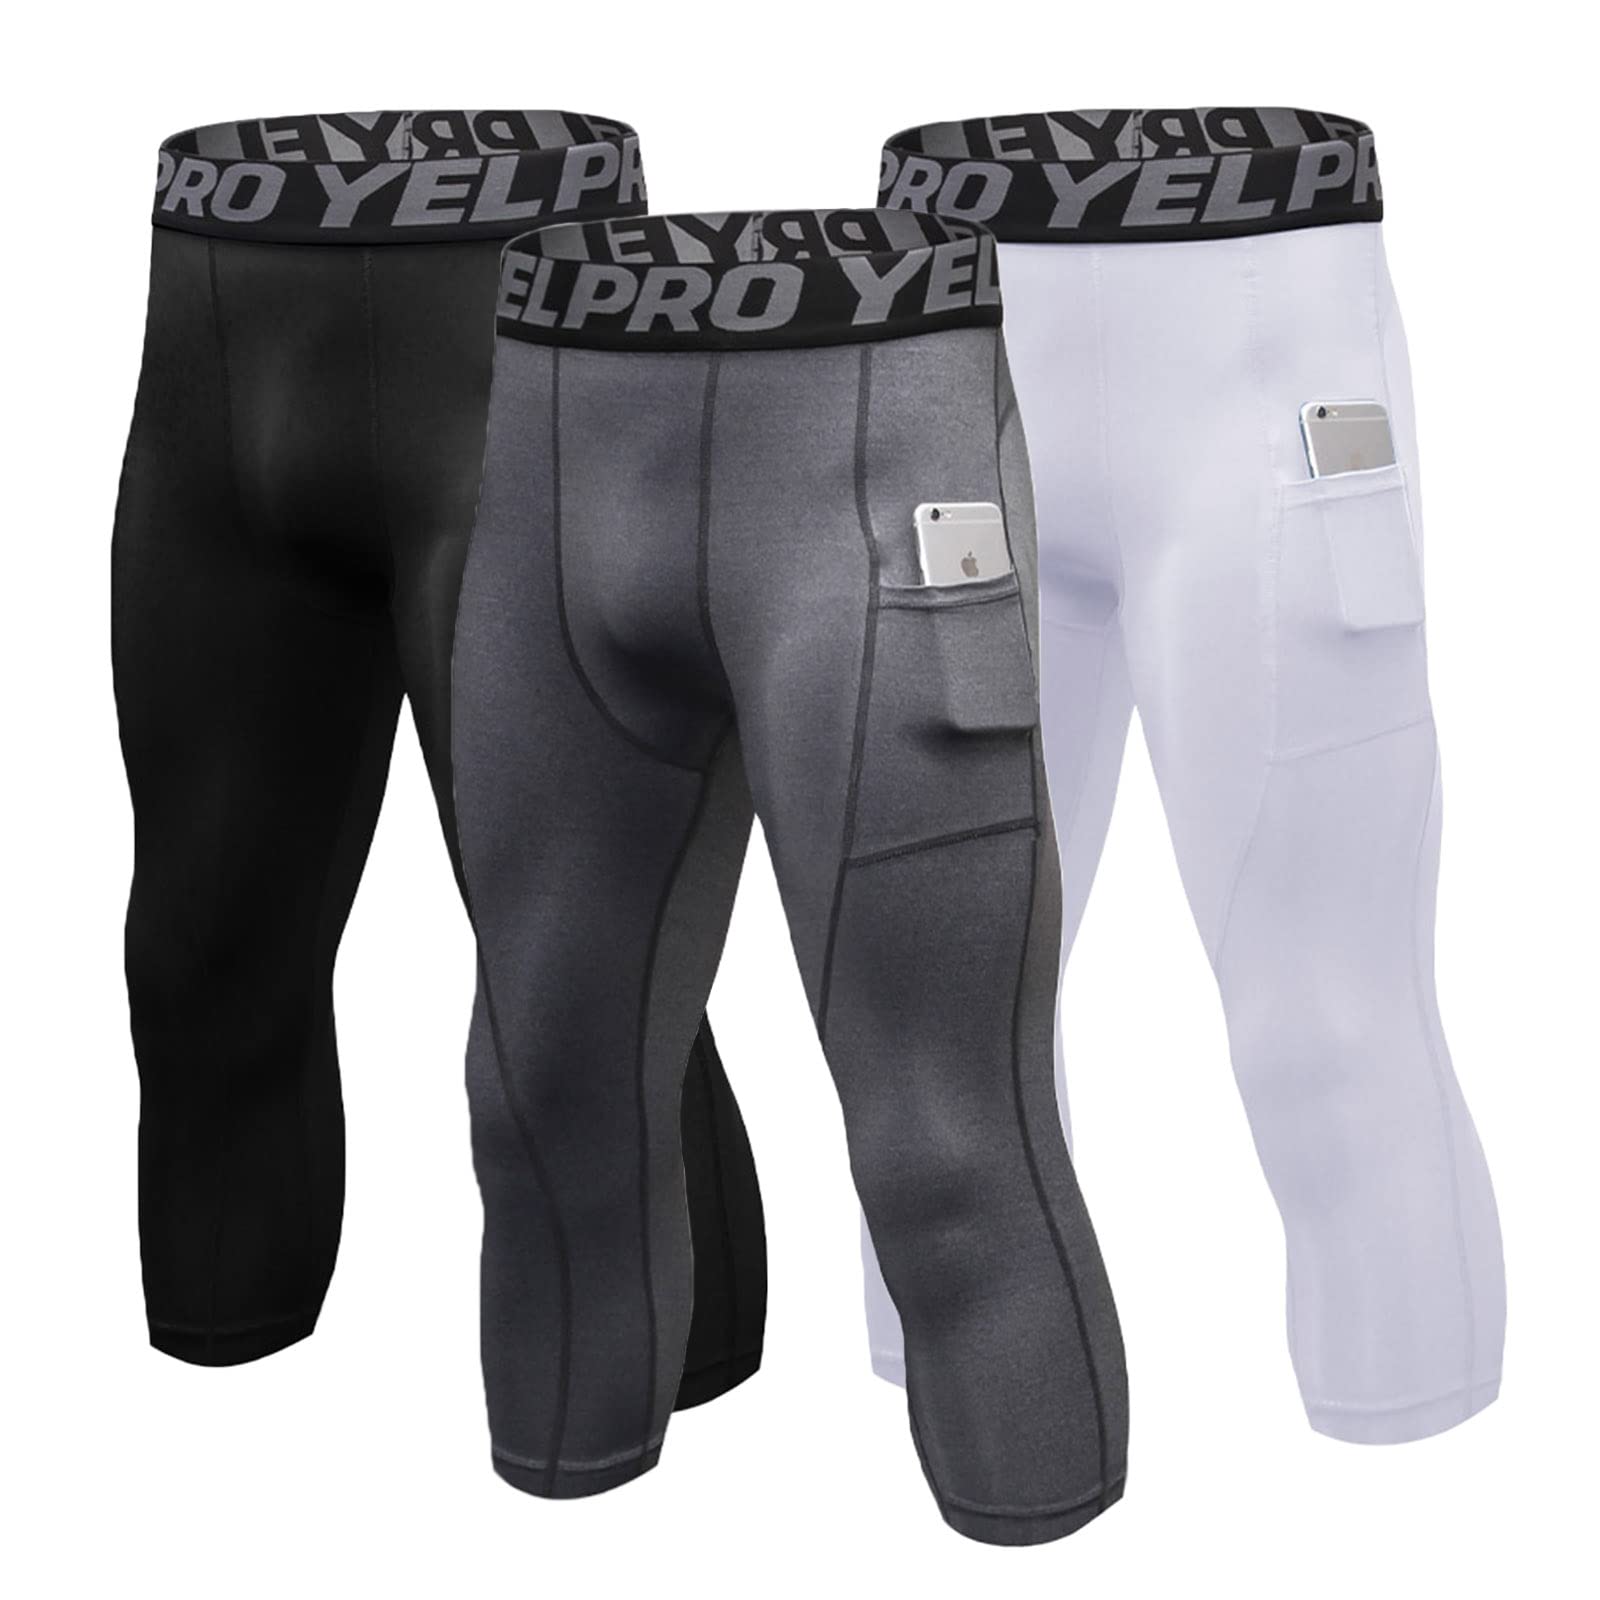 ABTIOYLLZ 3 Pack Men's 3/4 Compression Pants Athletic Leggings Running Capri  Tights Pocket Cool Dry Gym Basketball Baselayer 3 Pack-black+white+grey#01  Medium